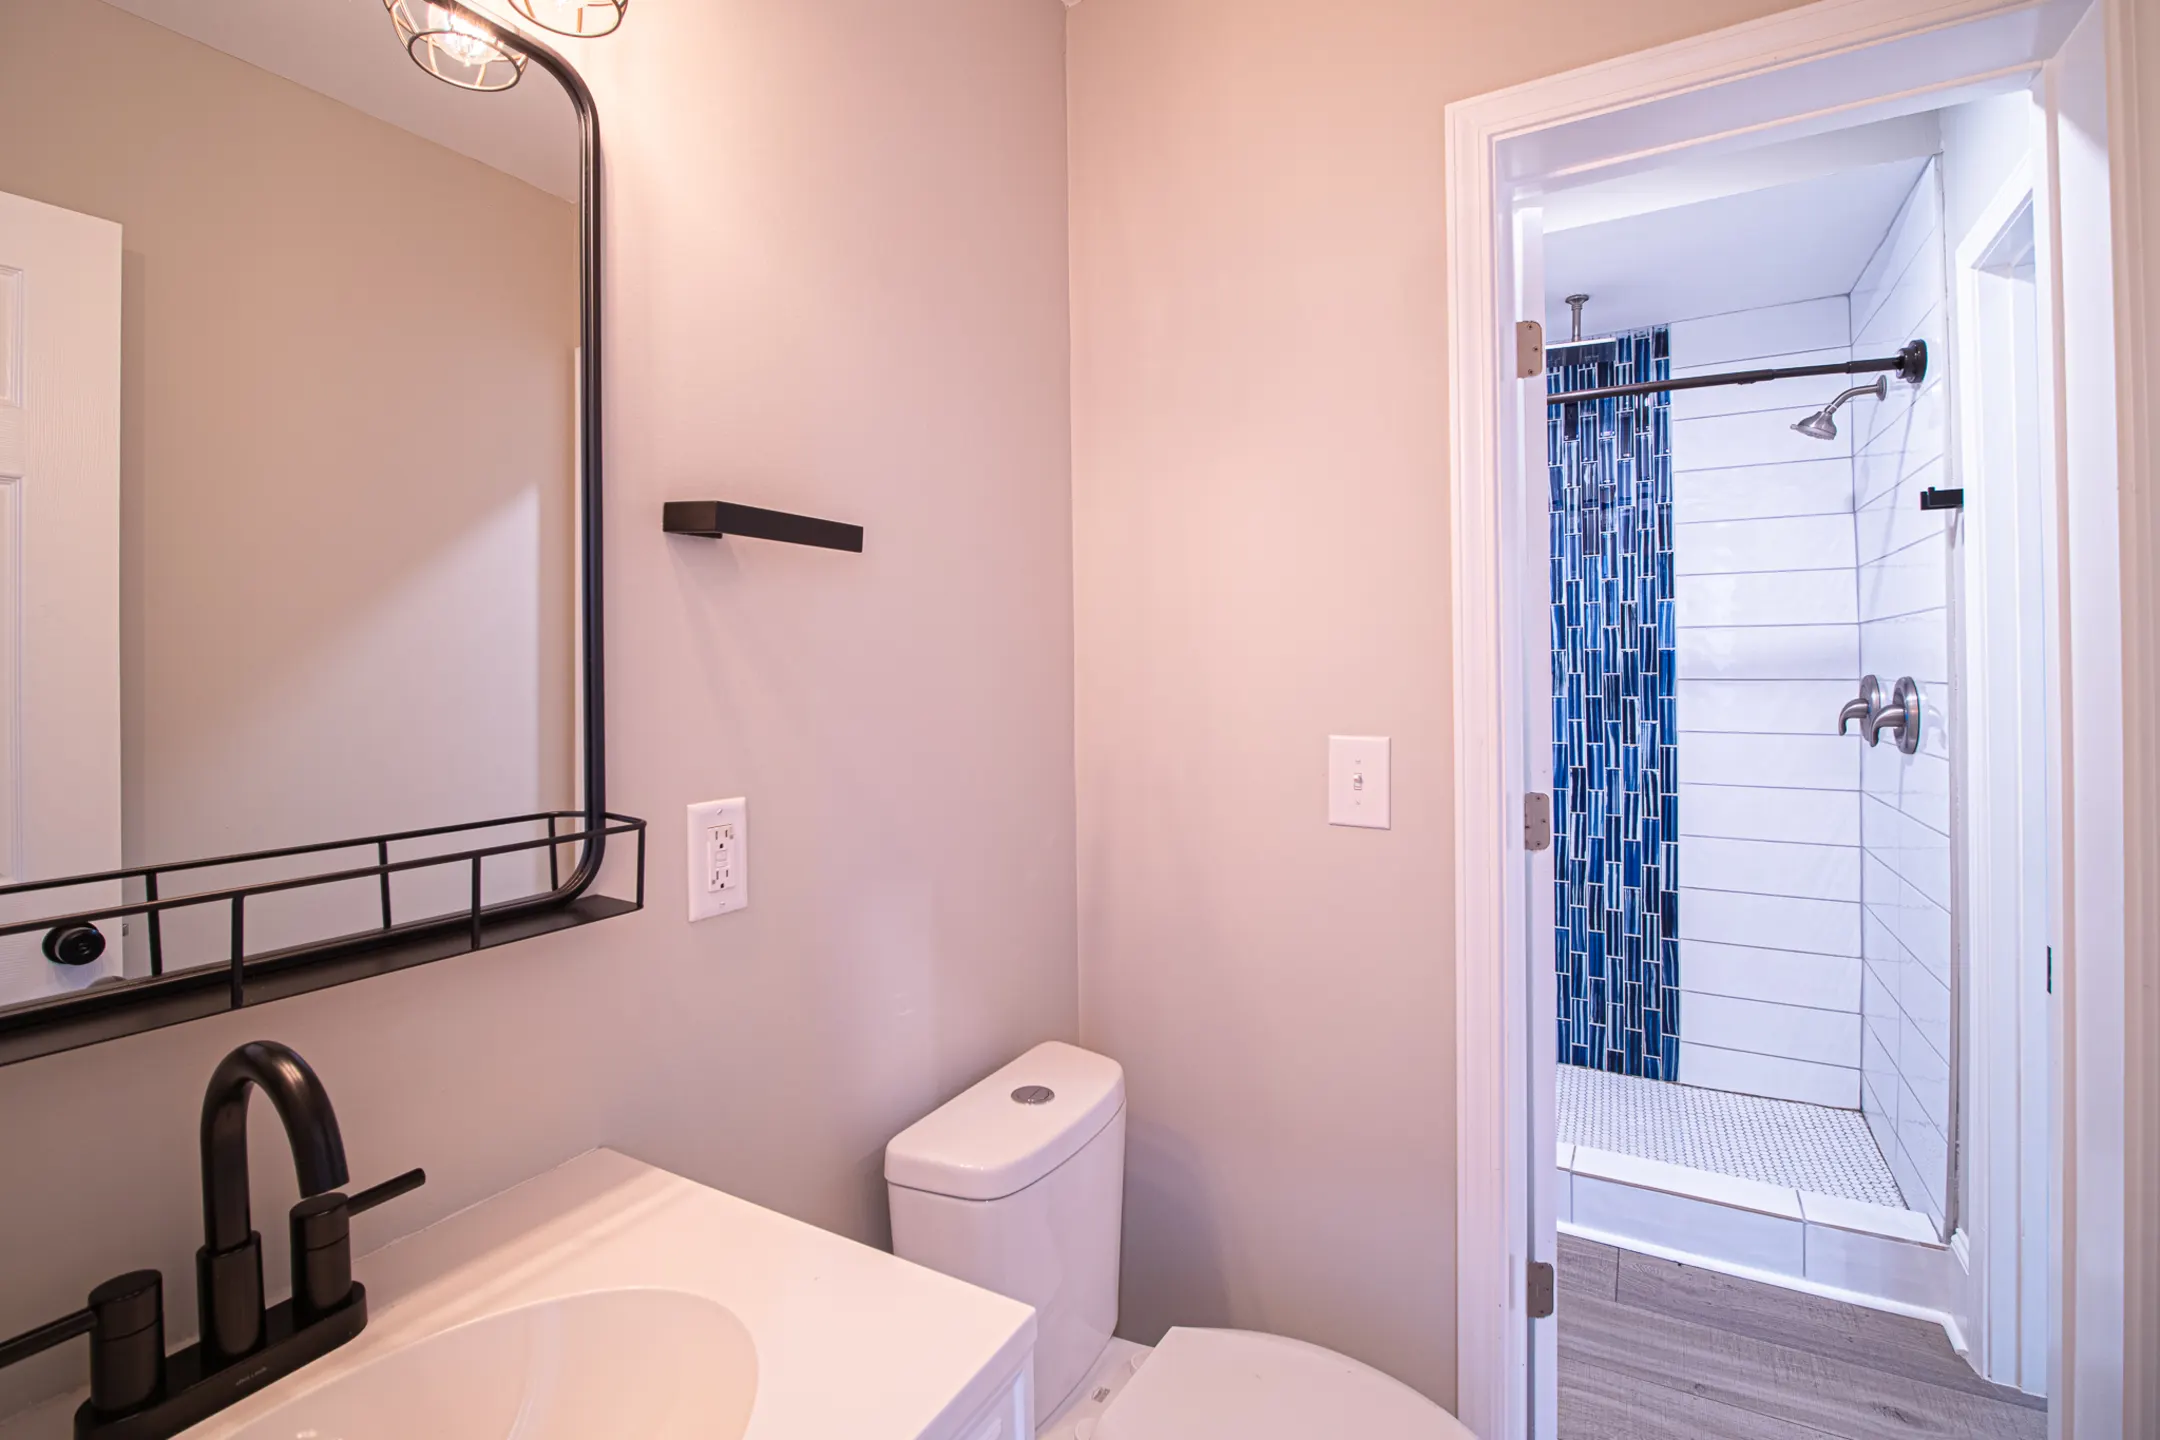 Bathroom - Victorian Village Apartments - Marietta, GA